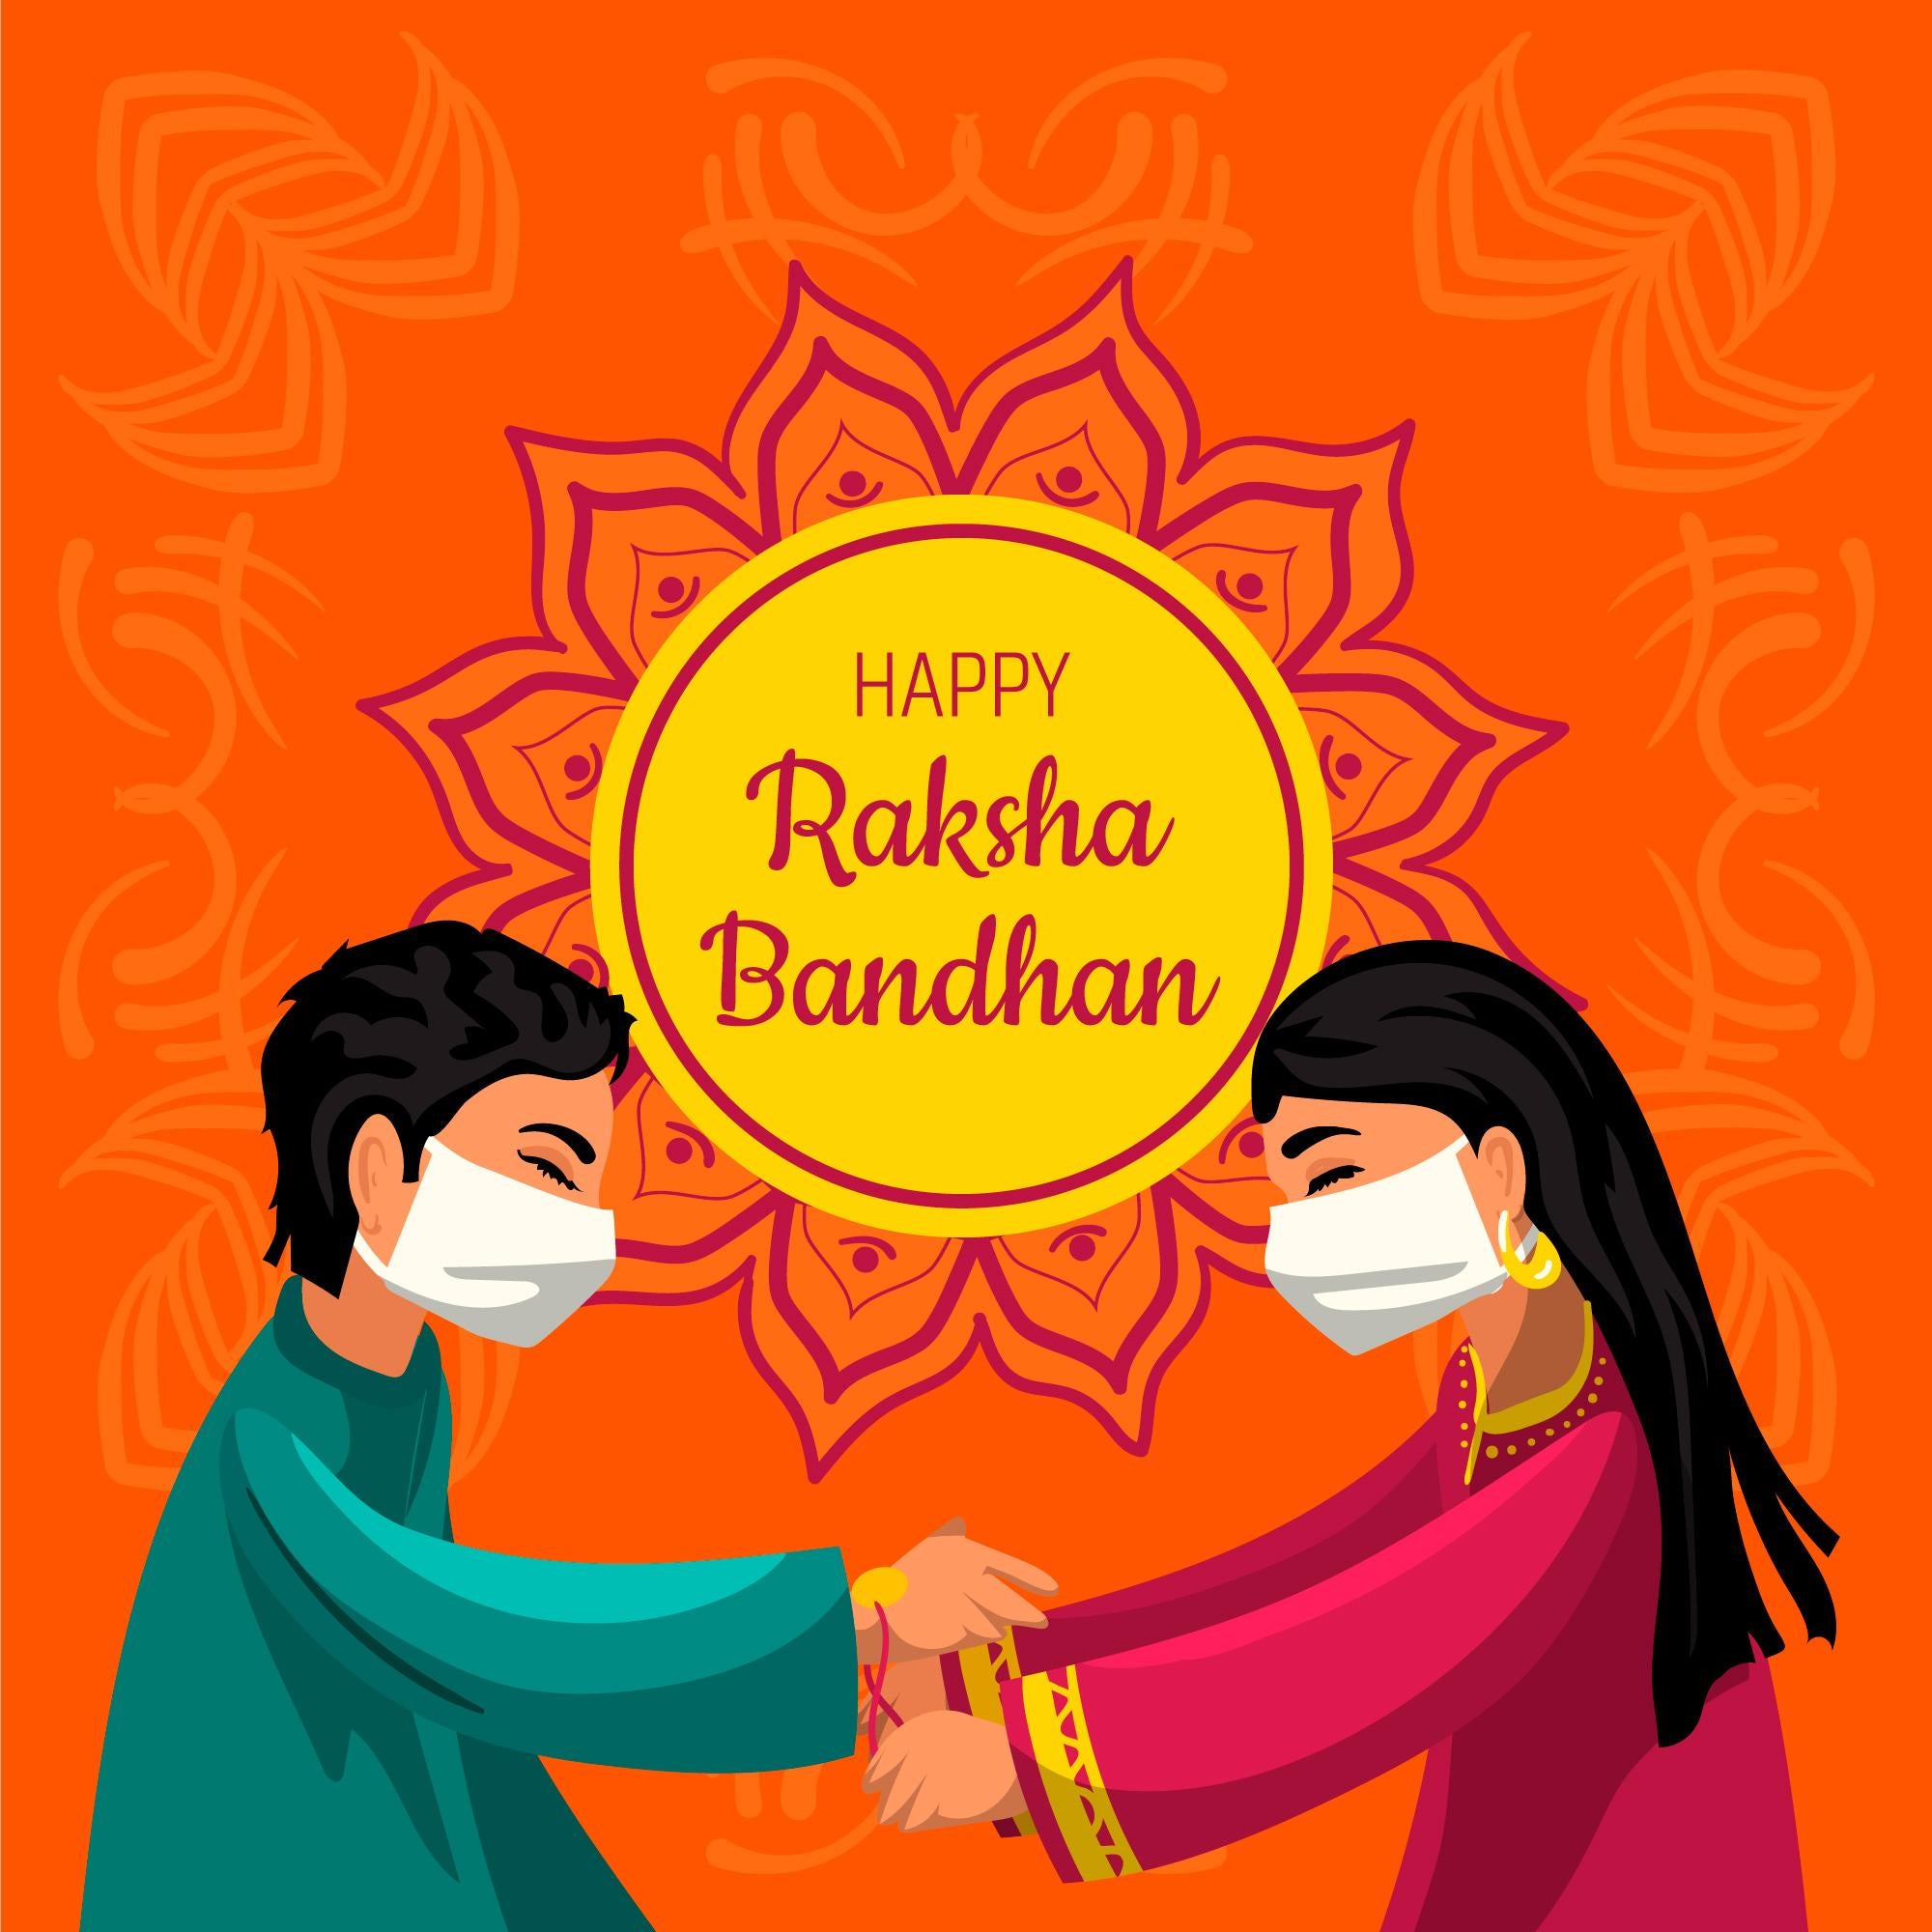 Best Raksha Bandhan Gift For Sister Under 500 Rupees – The Signature Box